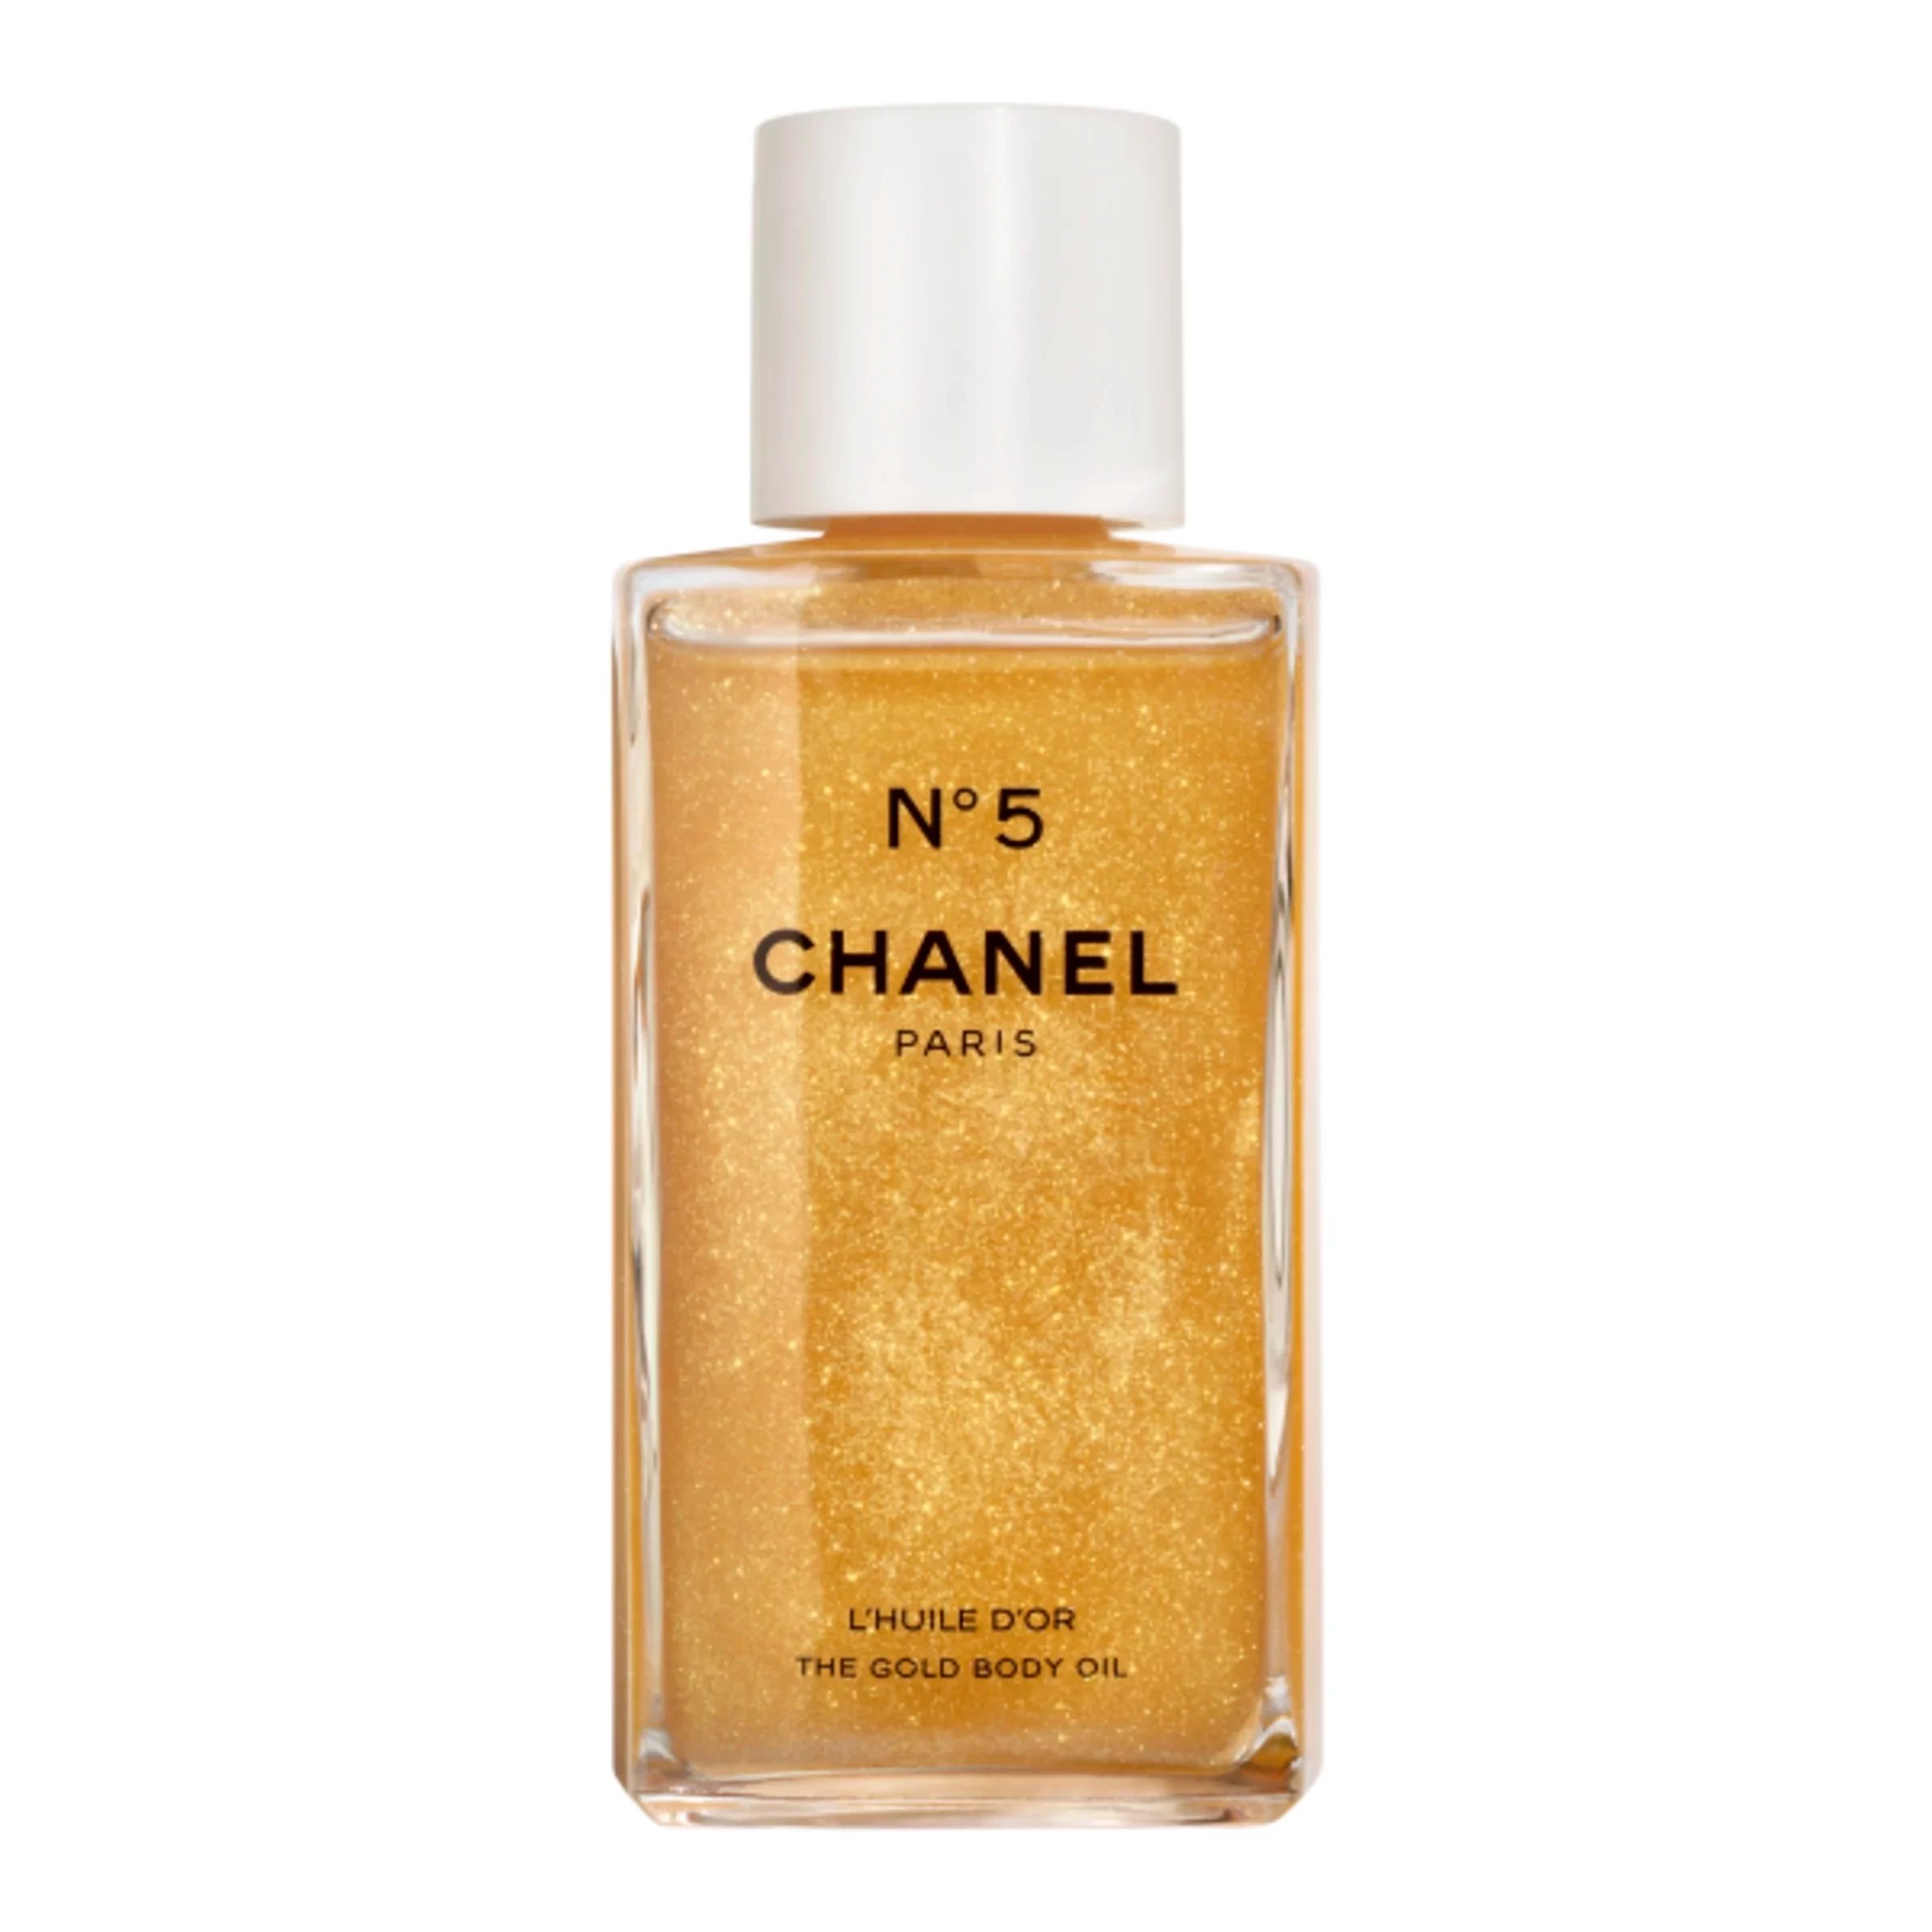 Chanel Black Glitter Resin Chanel No. 5 Parfum Brooch